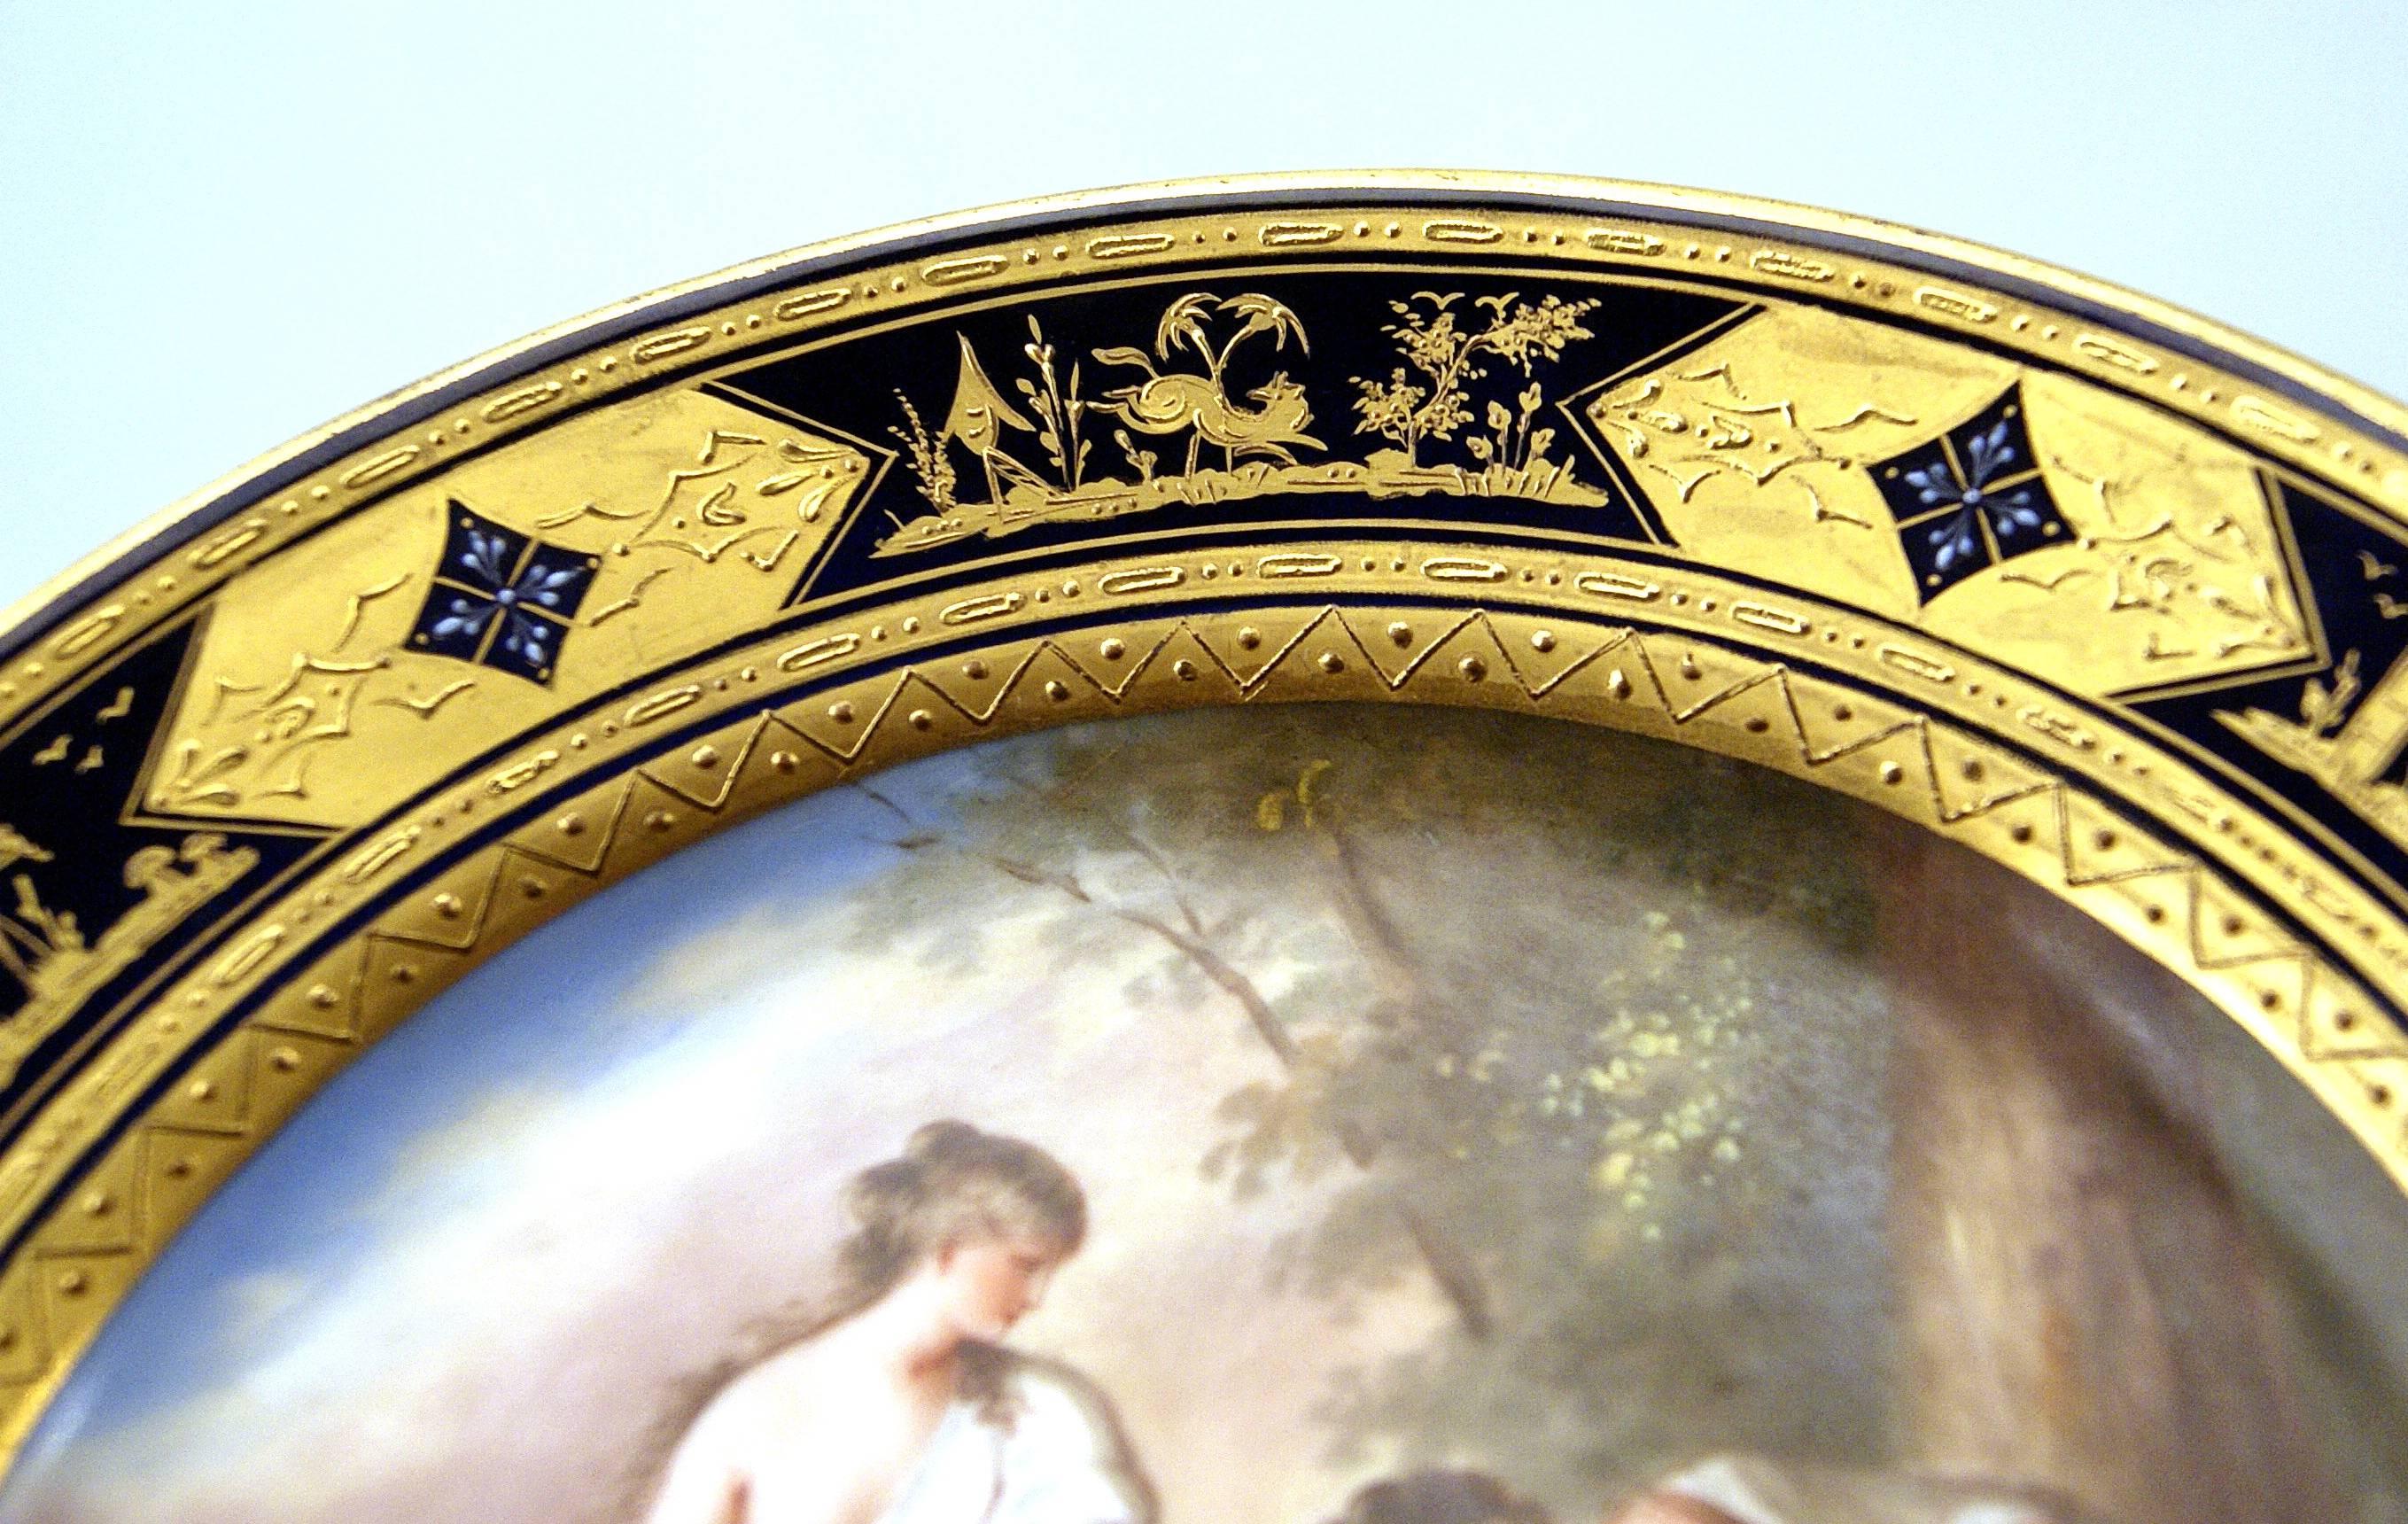 Painted Stunning Royal Vienna Porcelain Plate Mars and Venus, circa 1880